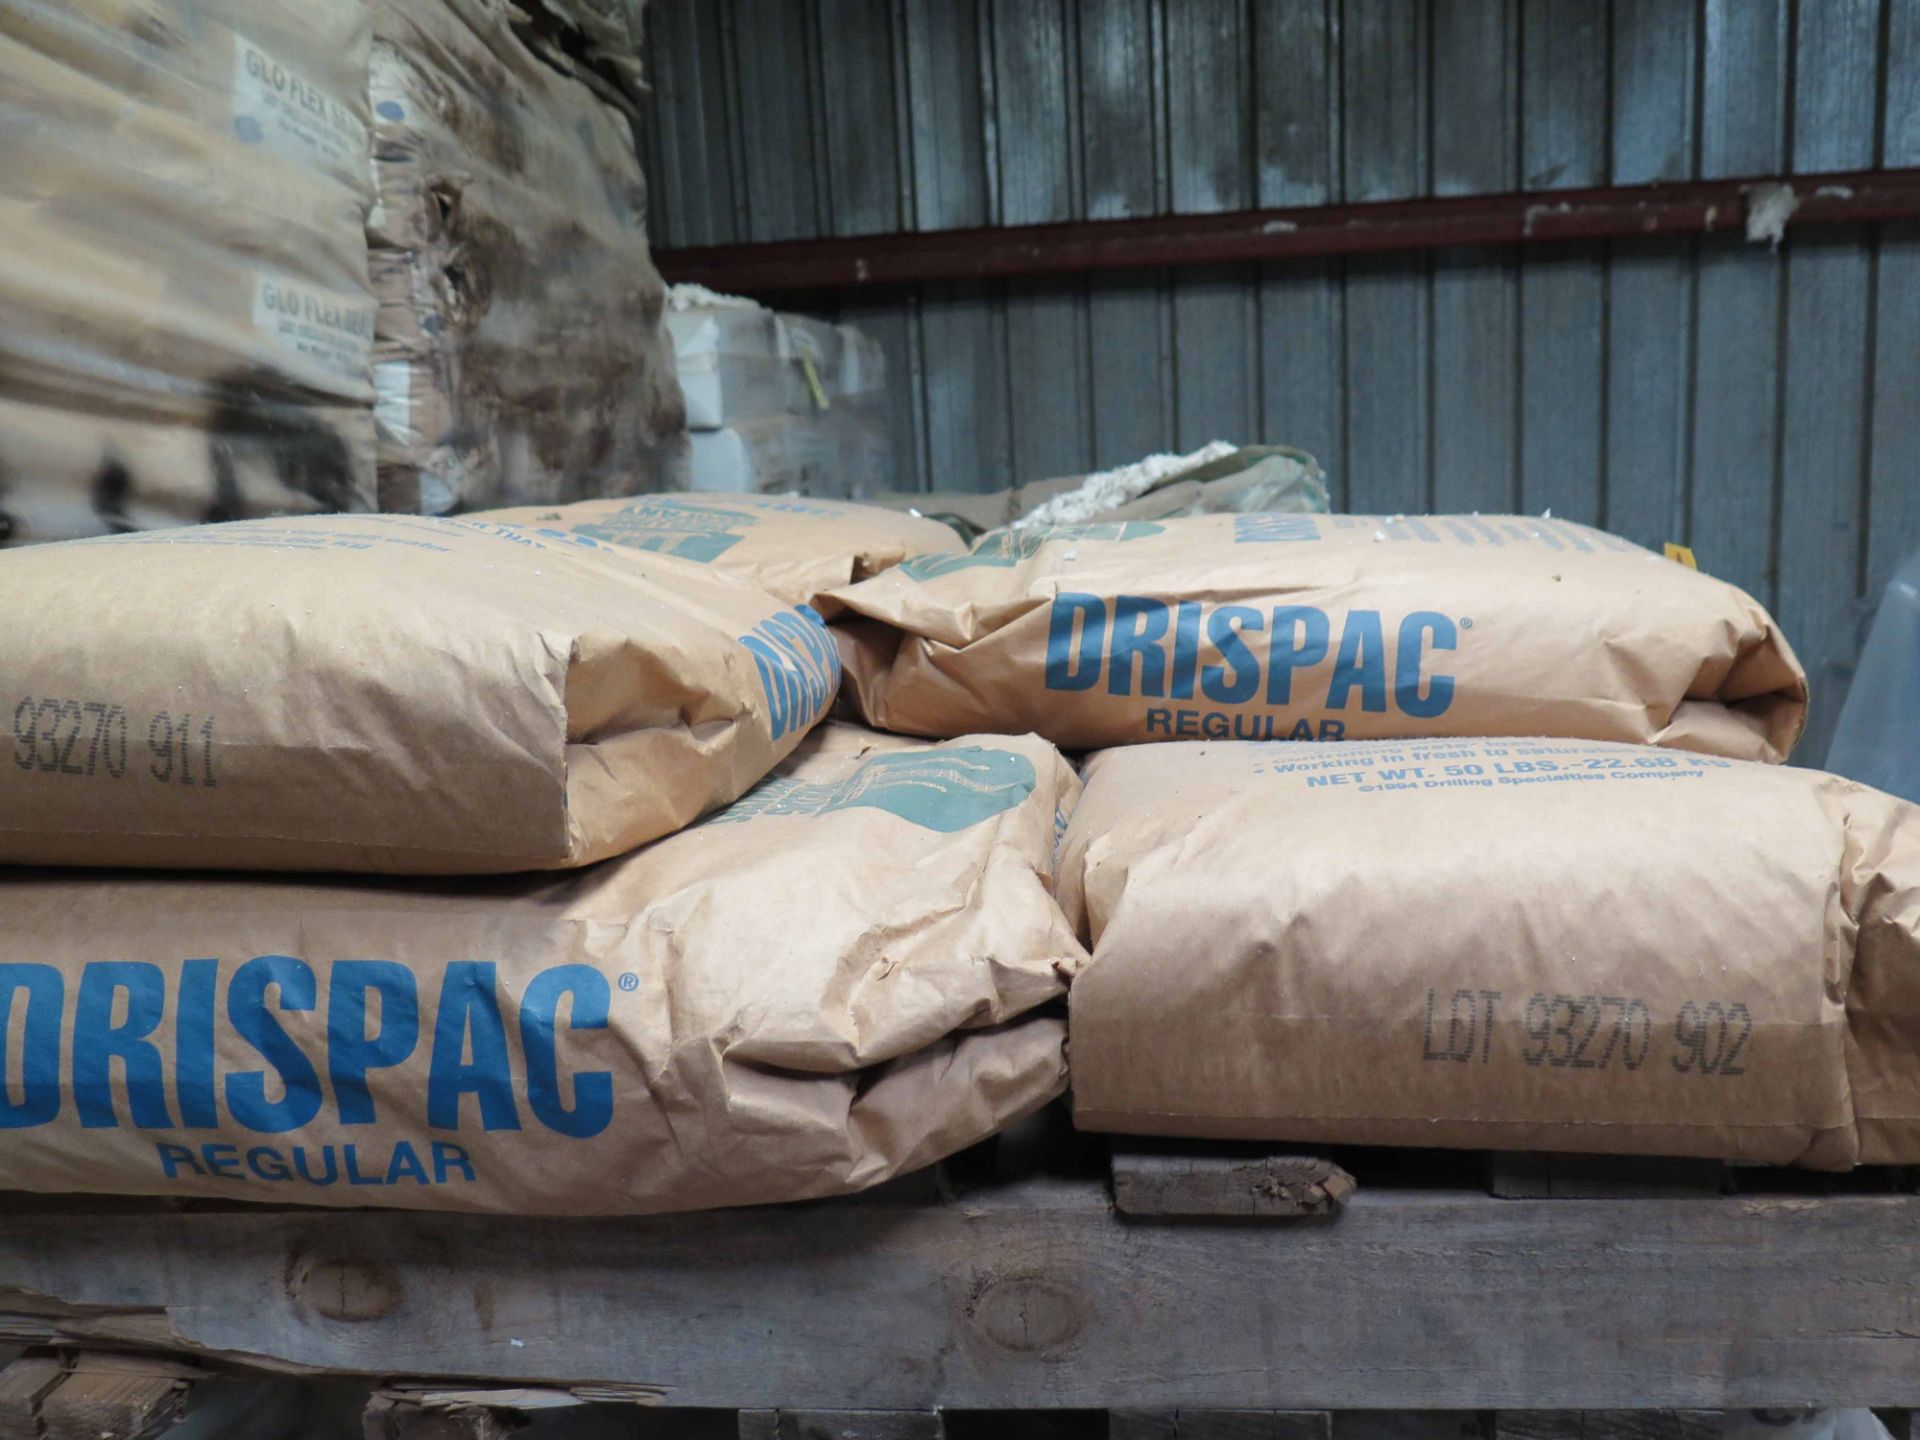 LOT OF DRISPAC, 50 lb. bags (approx. (8) 50 lb. bags) (Location #5: 331 East Walnut, Enid, OK